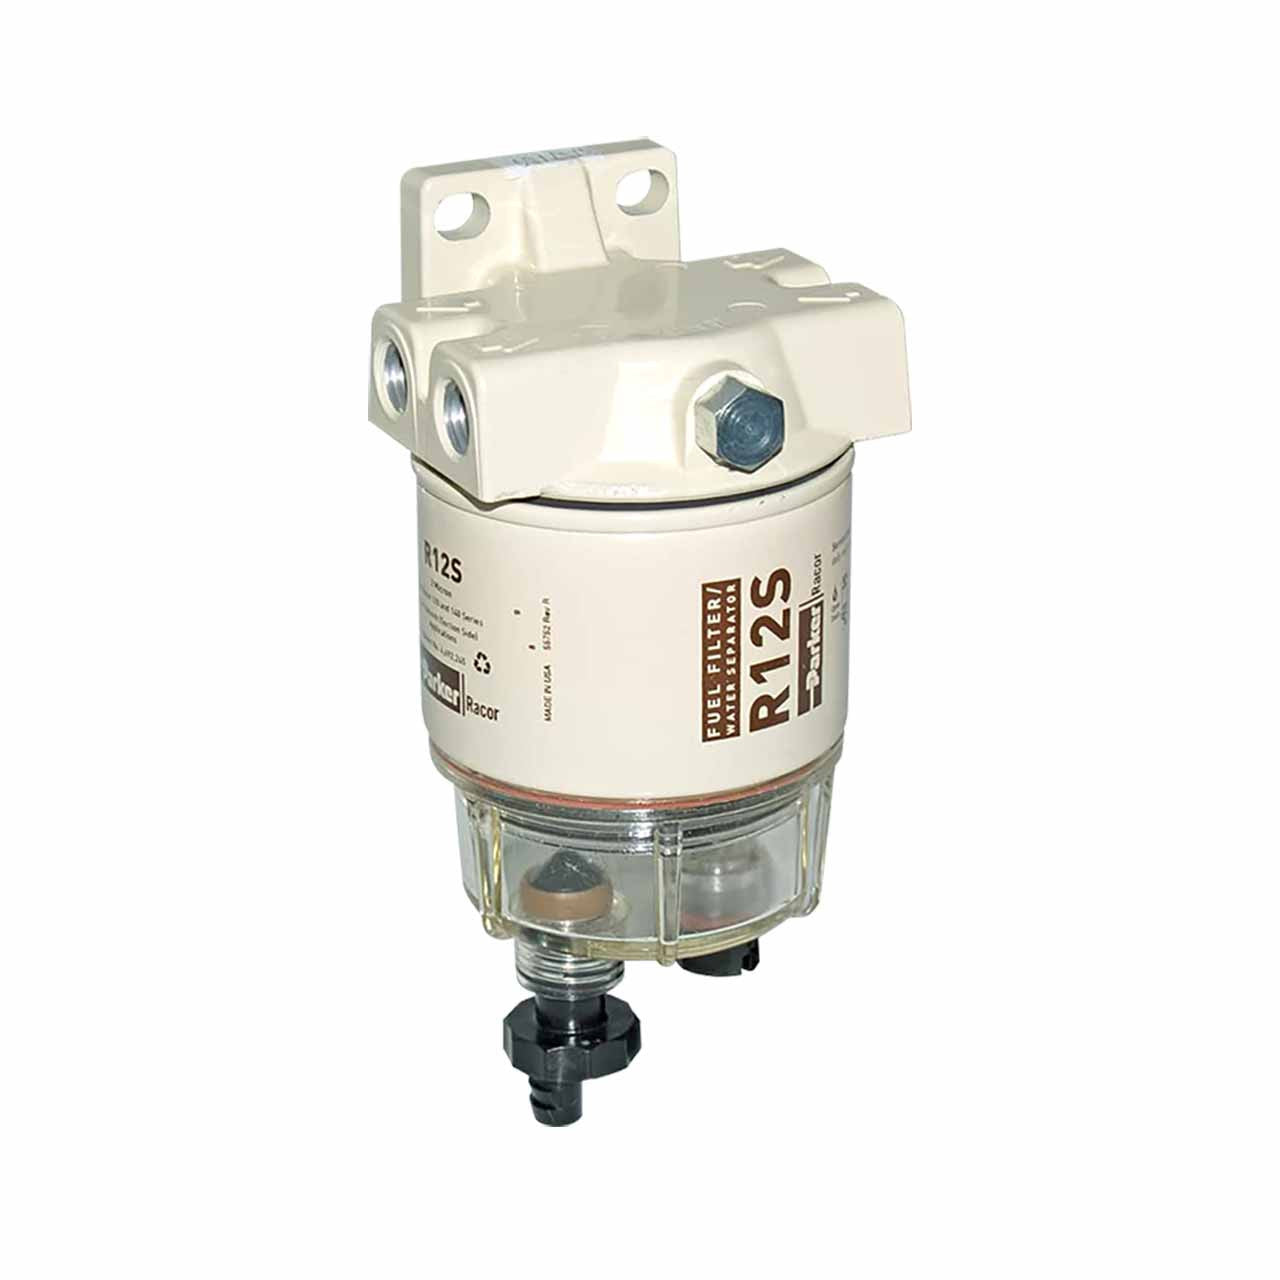 120AS Racor Fuel Filter / Water Separator - Flows 75 LPH